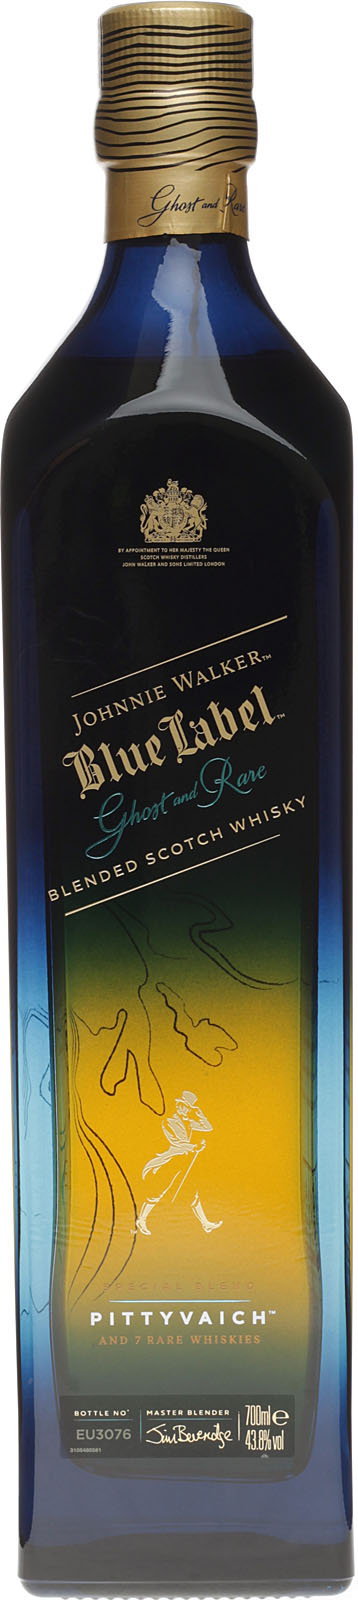 Johnnie Walker Blue Label Ghost And Rare Pittyvaich Blend 0933